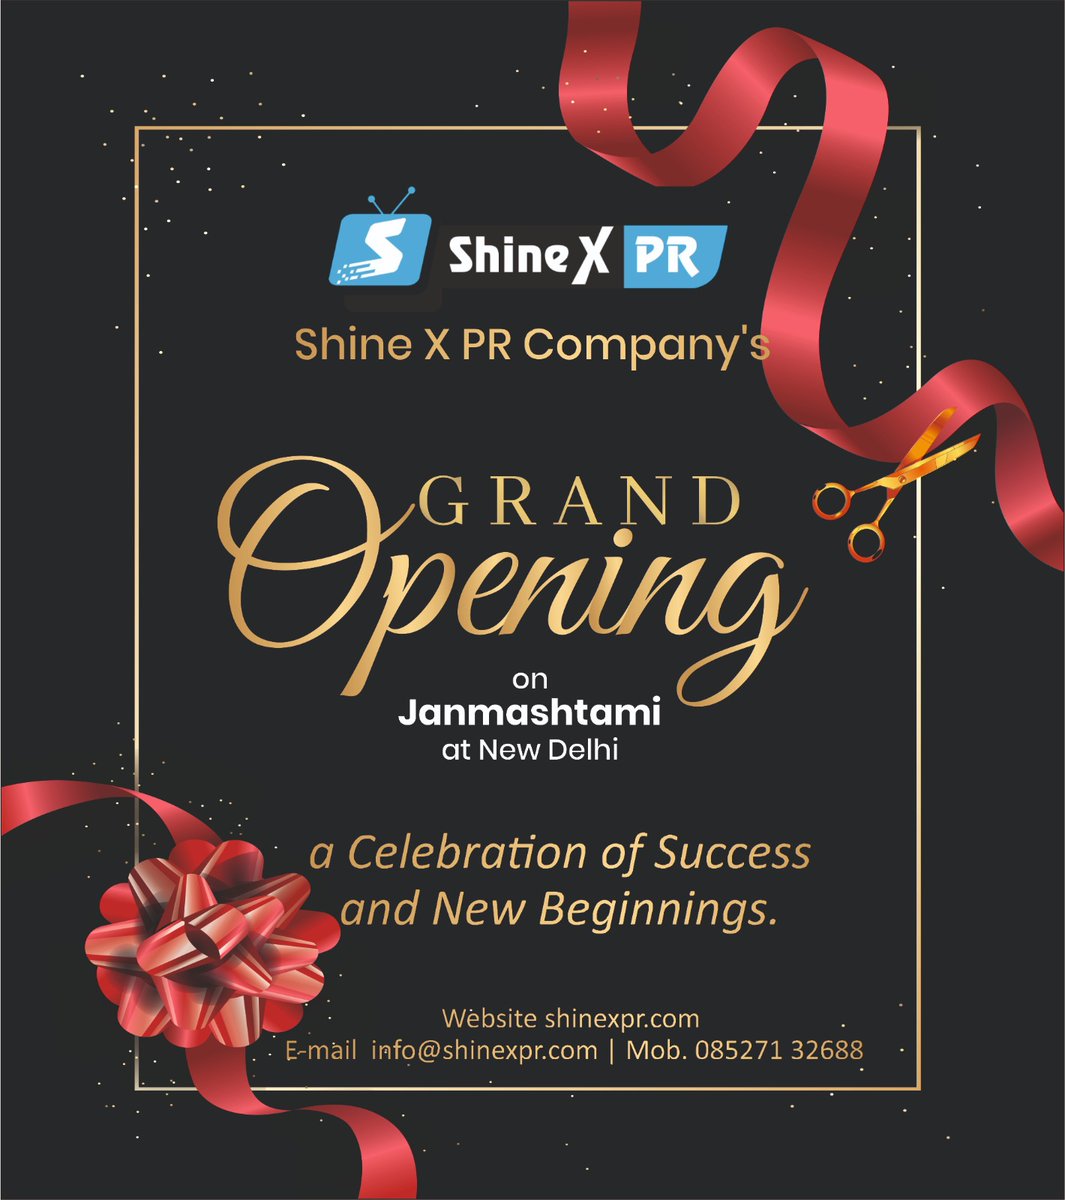 #ShineXPRGrandOpening 🌟
Celebrating Success and New Beginnings on this auspicious #Janmashtami! 🎉🎊 #PRCompany #SuccessStory